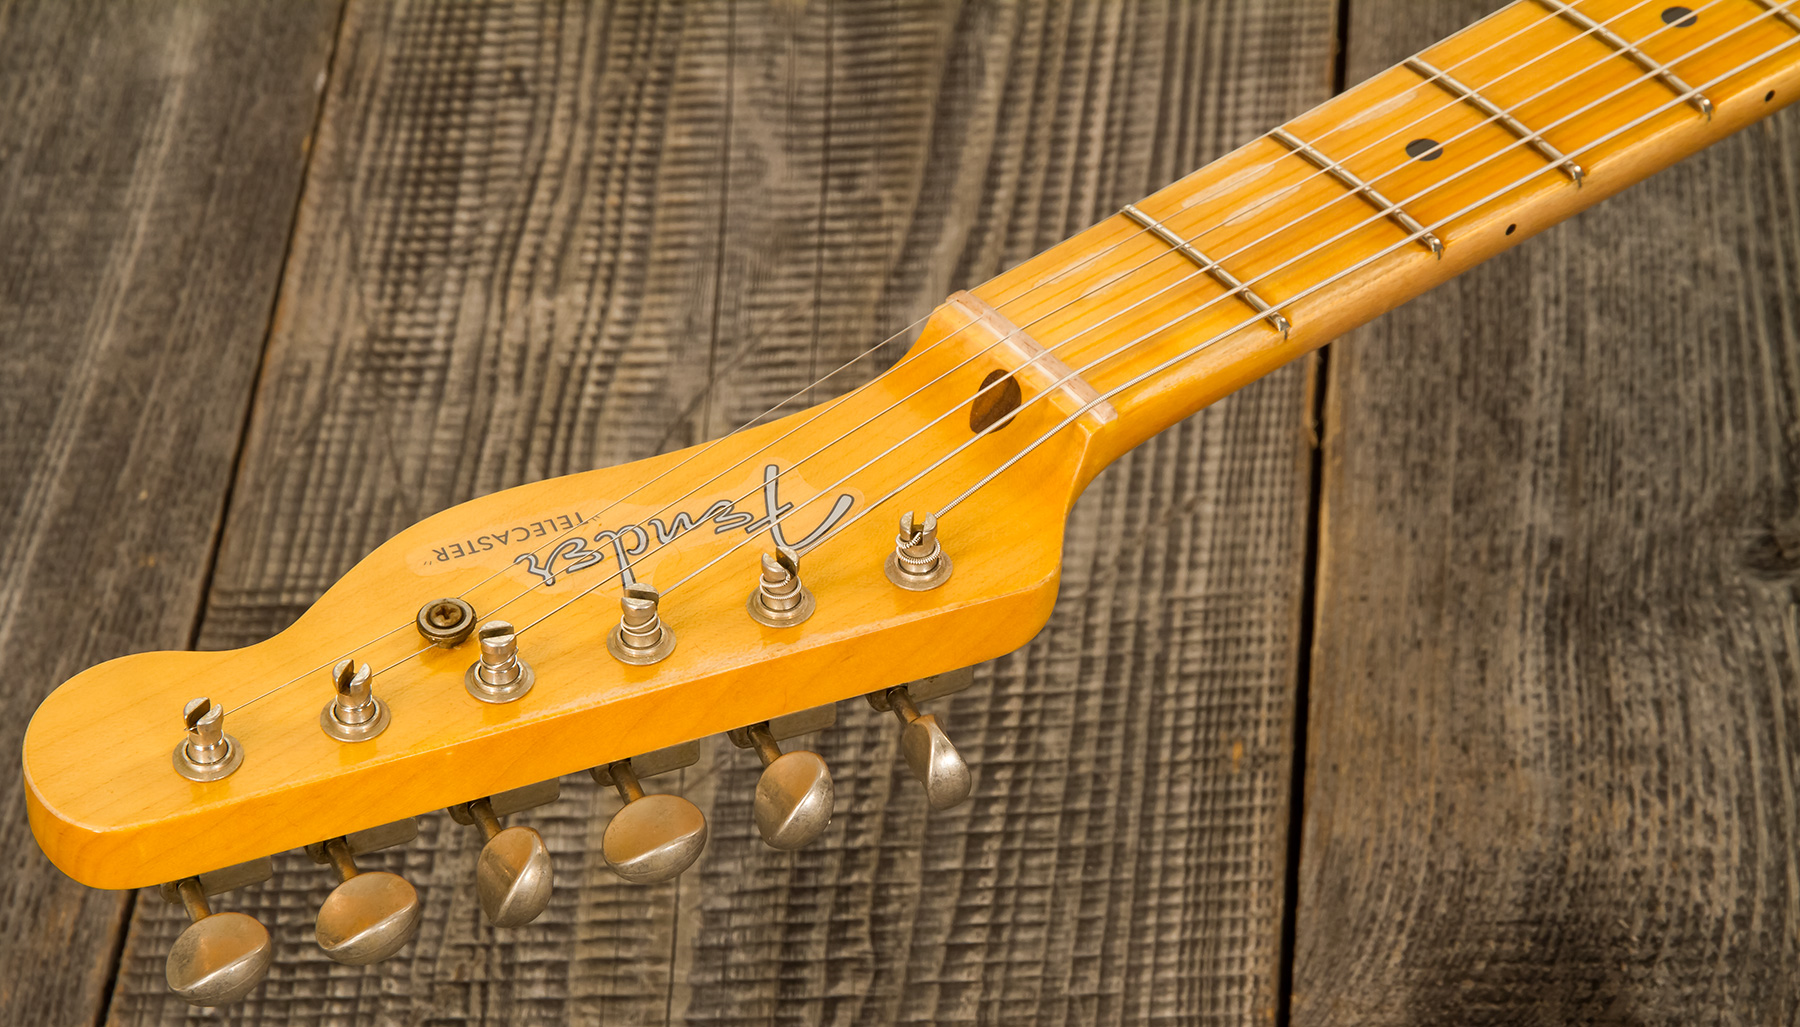 Fender Custom Shop Tele 1955 Ltd 2s Ht Mn #cz560649 - Relic Wide Fade 2-color Sunburst - Televorm elektrische gitaar - Variation 8